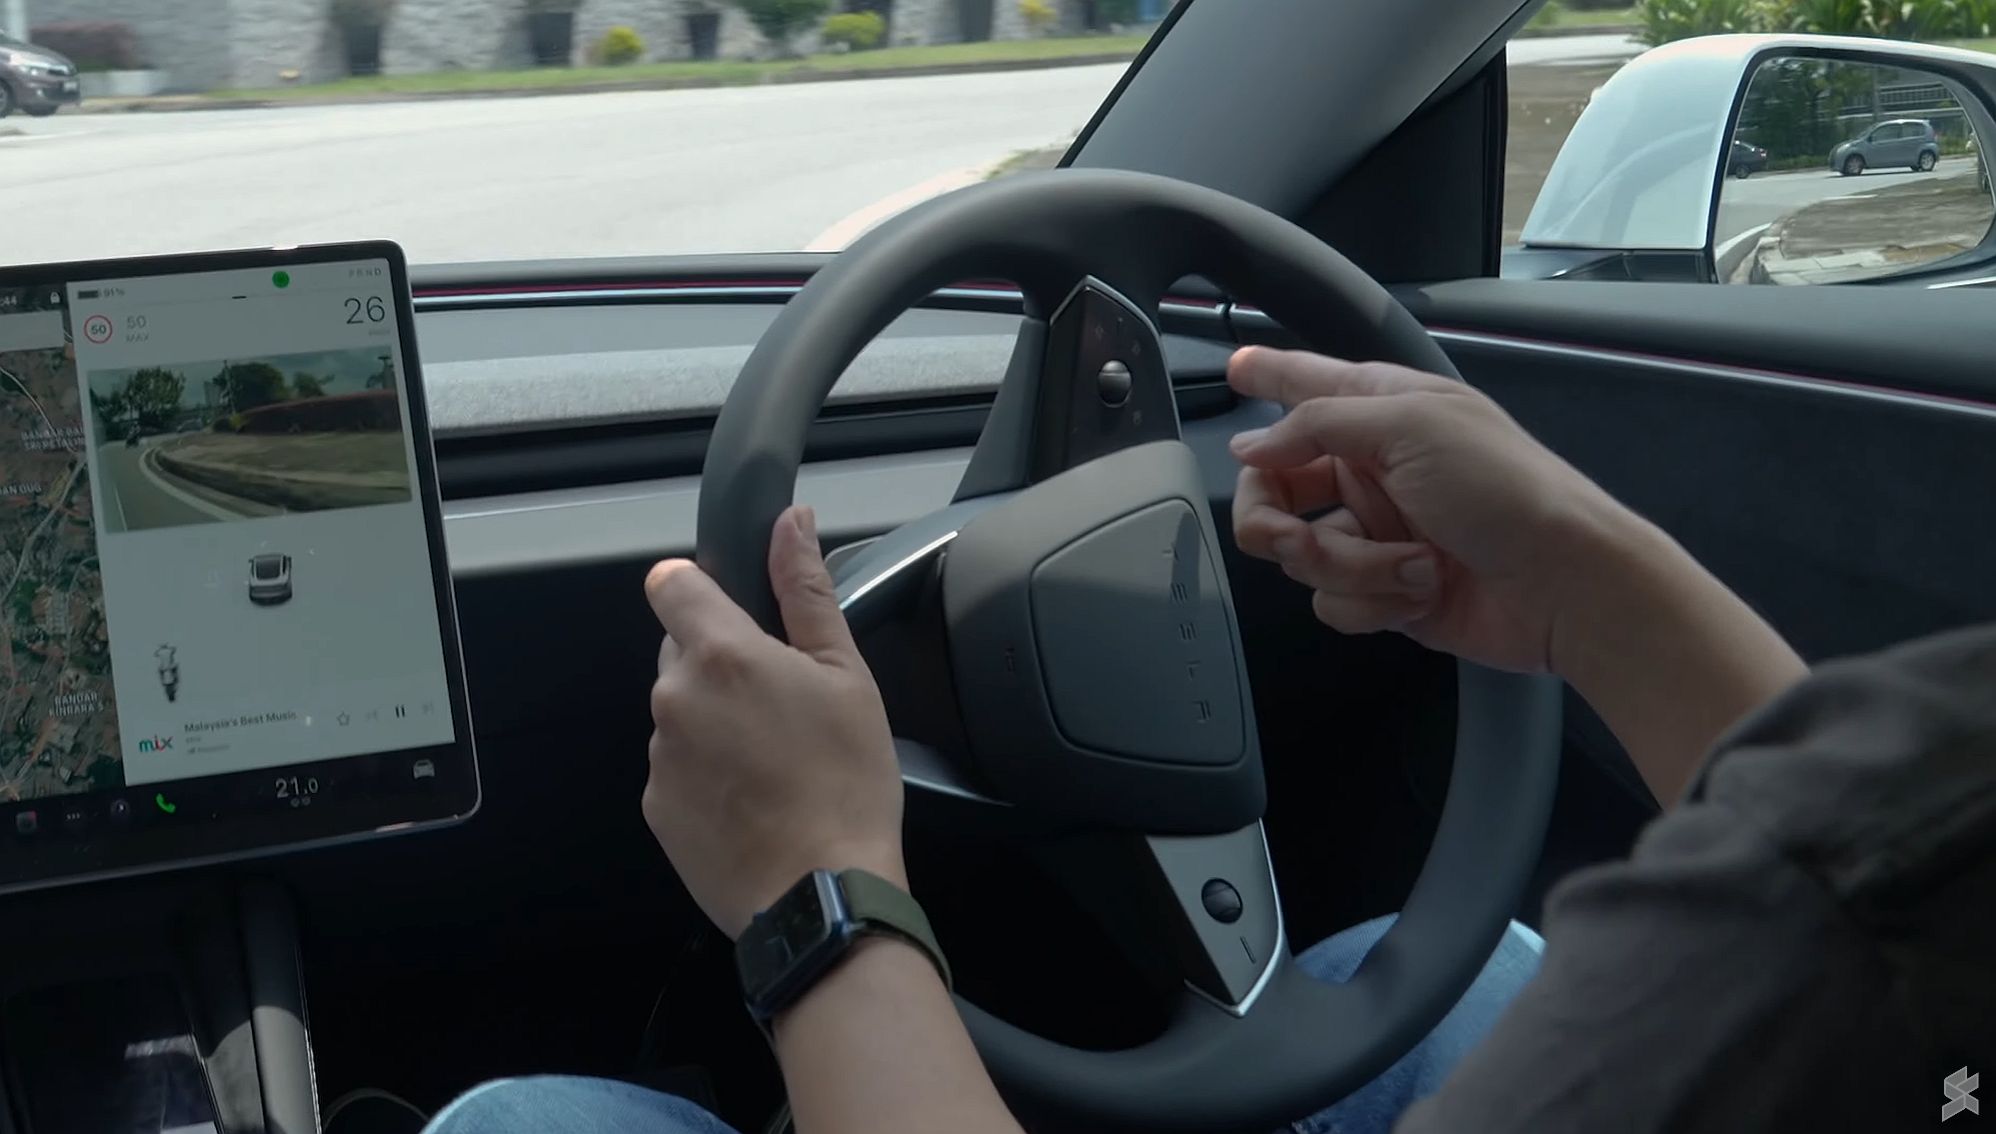 Tesla Model 3 Roundabout Test: No signal stalks, no problem?